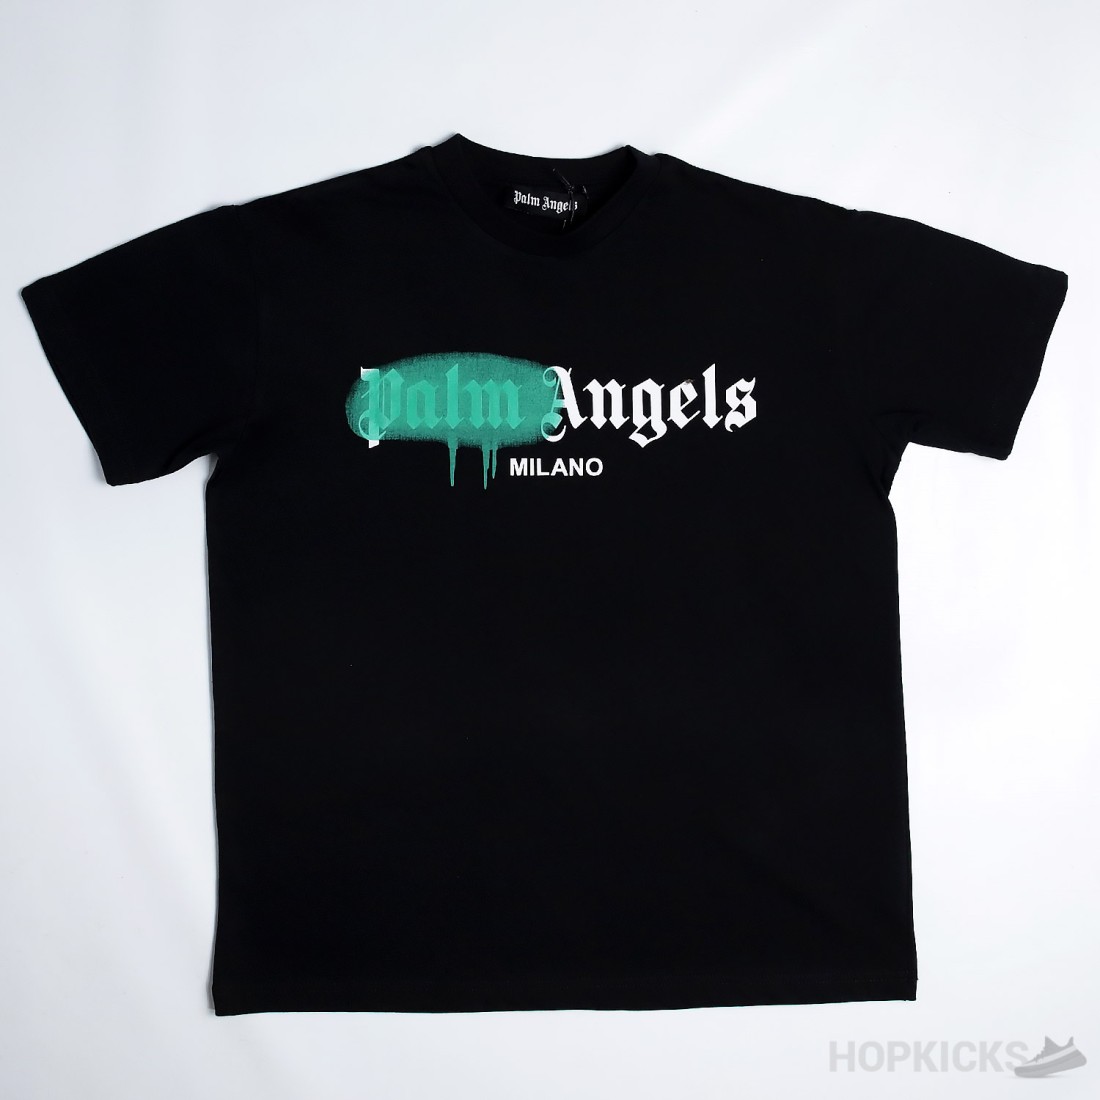 Level semi-transparent T-shirt - PALM ANGELS Milano Spray T - Shirt